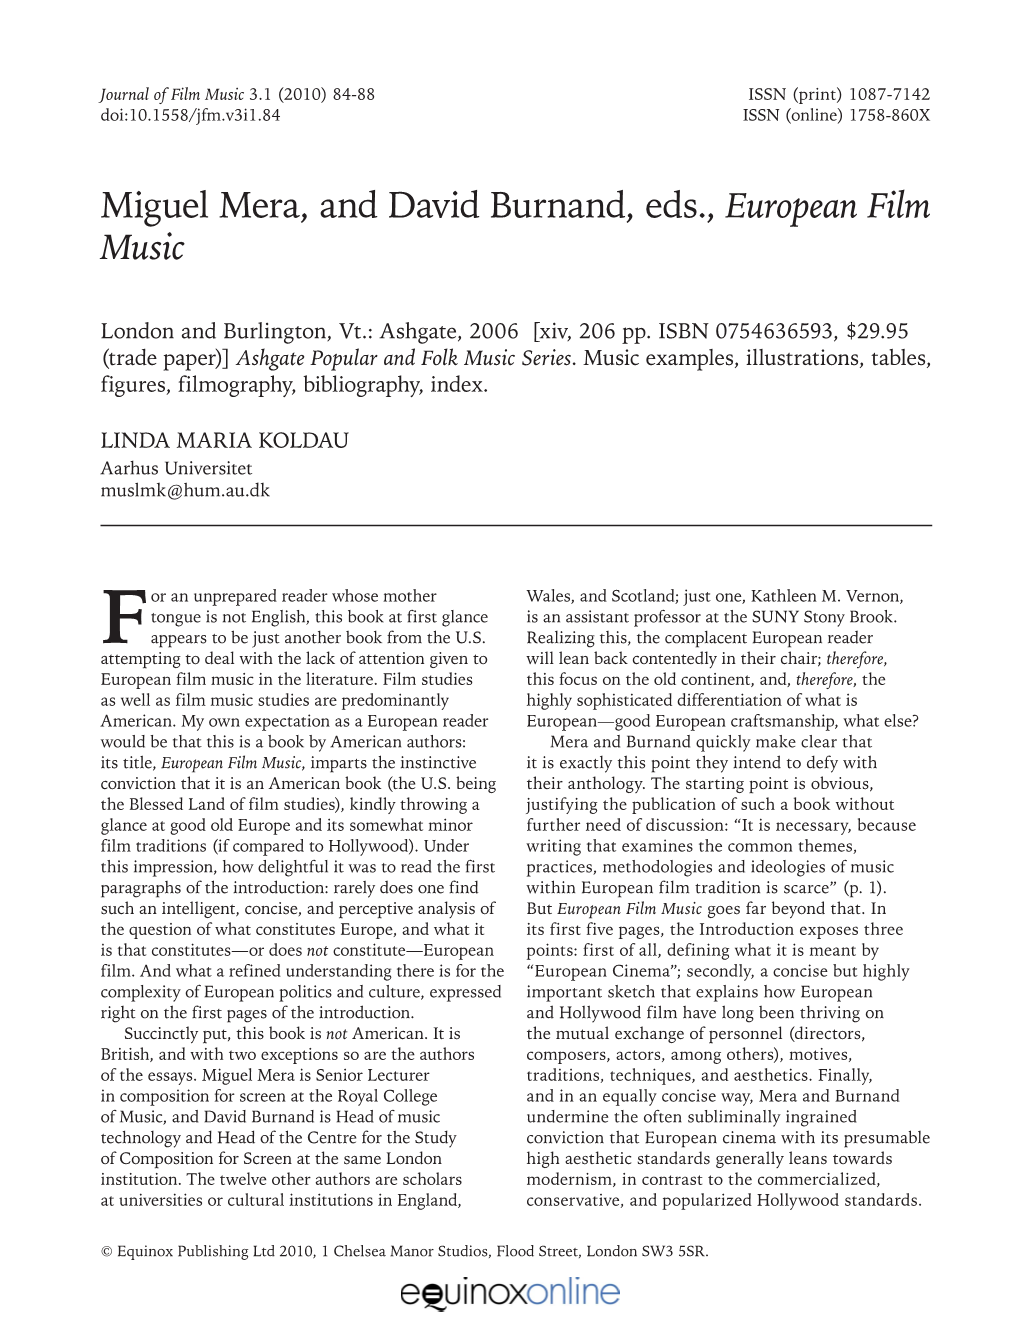 Miguel Mera, and David Burnand, Eds., European Film Music